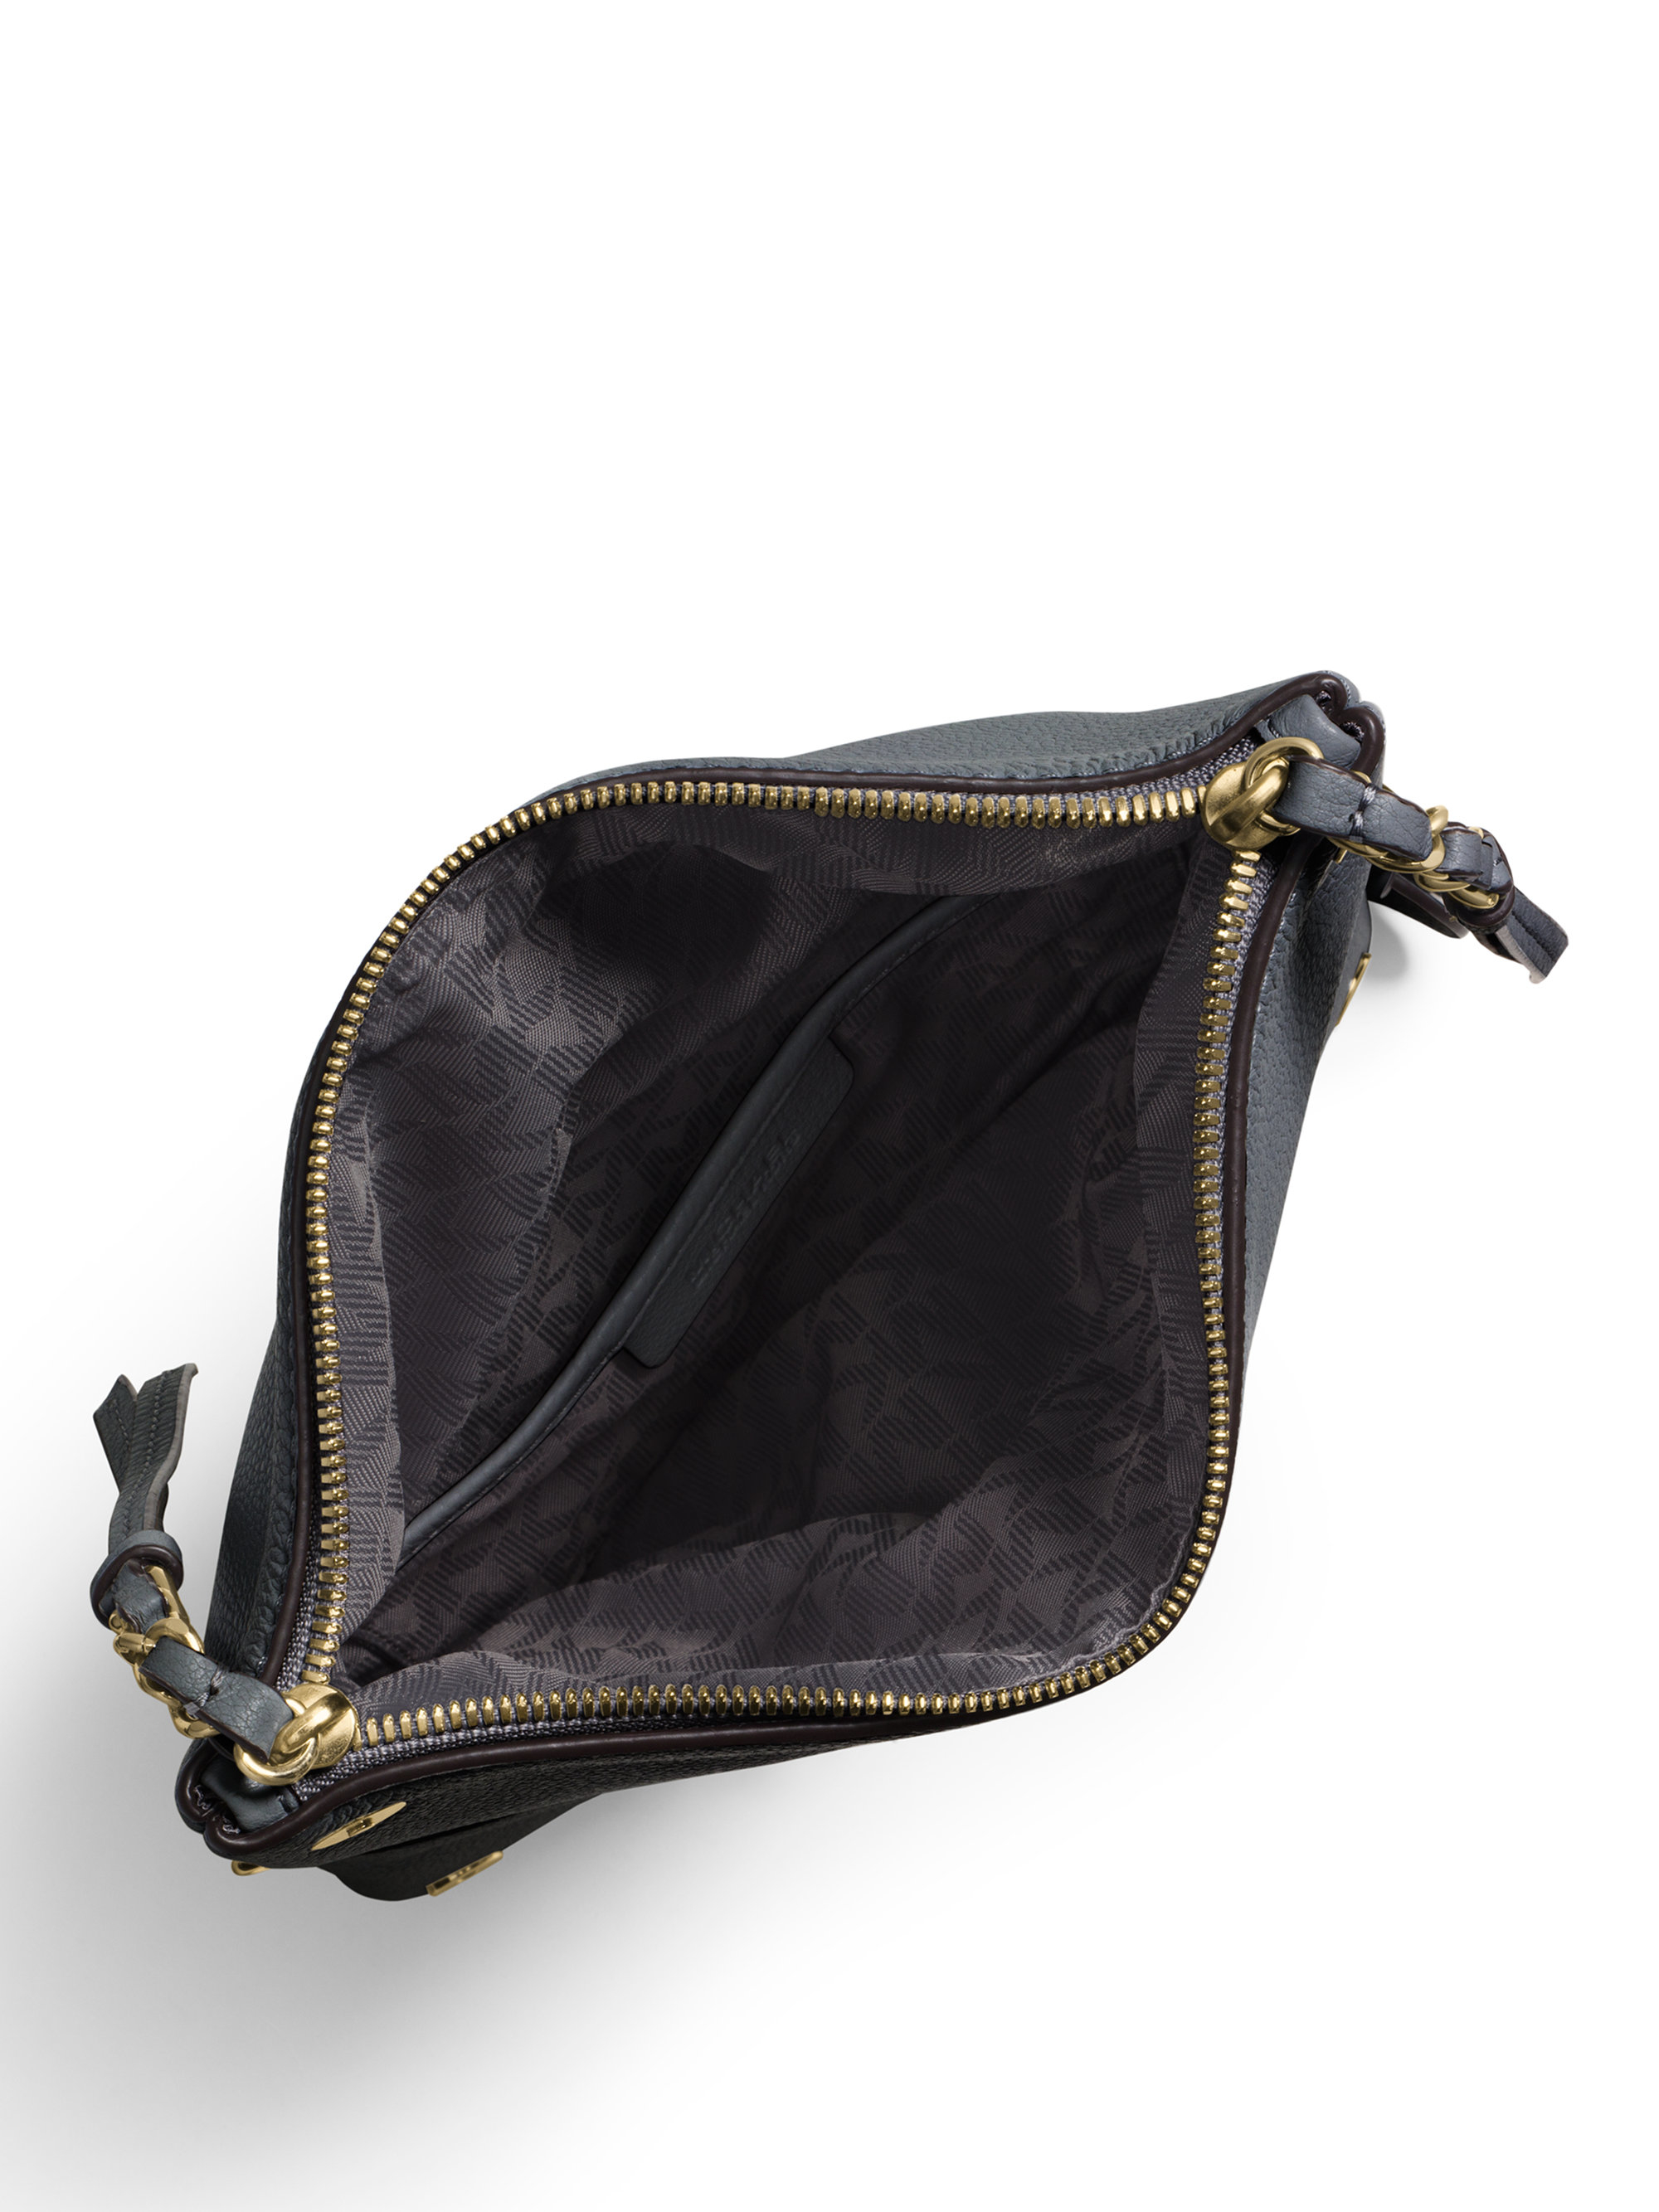 MICHAEL Michael Kors Corinne Medium Leather Messenger Bag in Black - Lyst